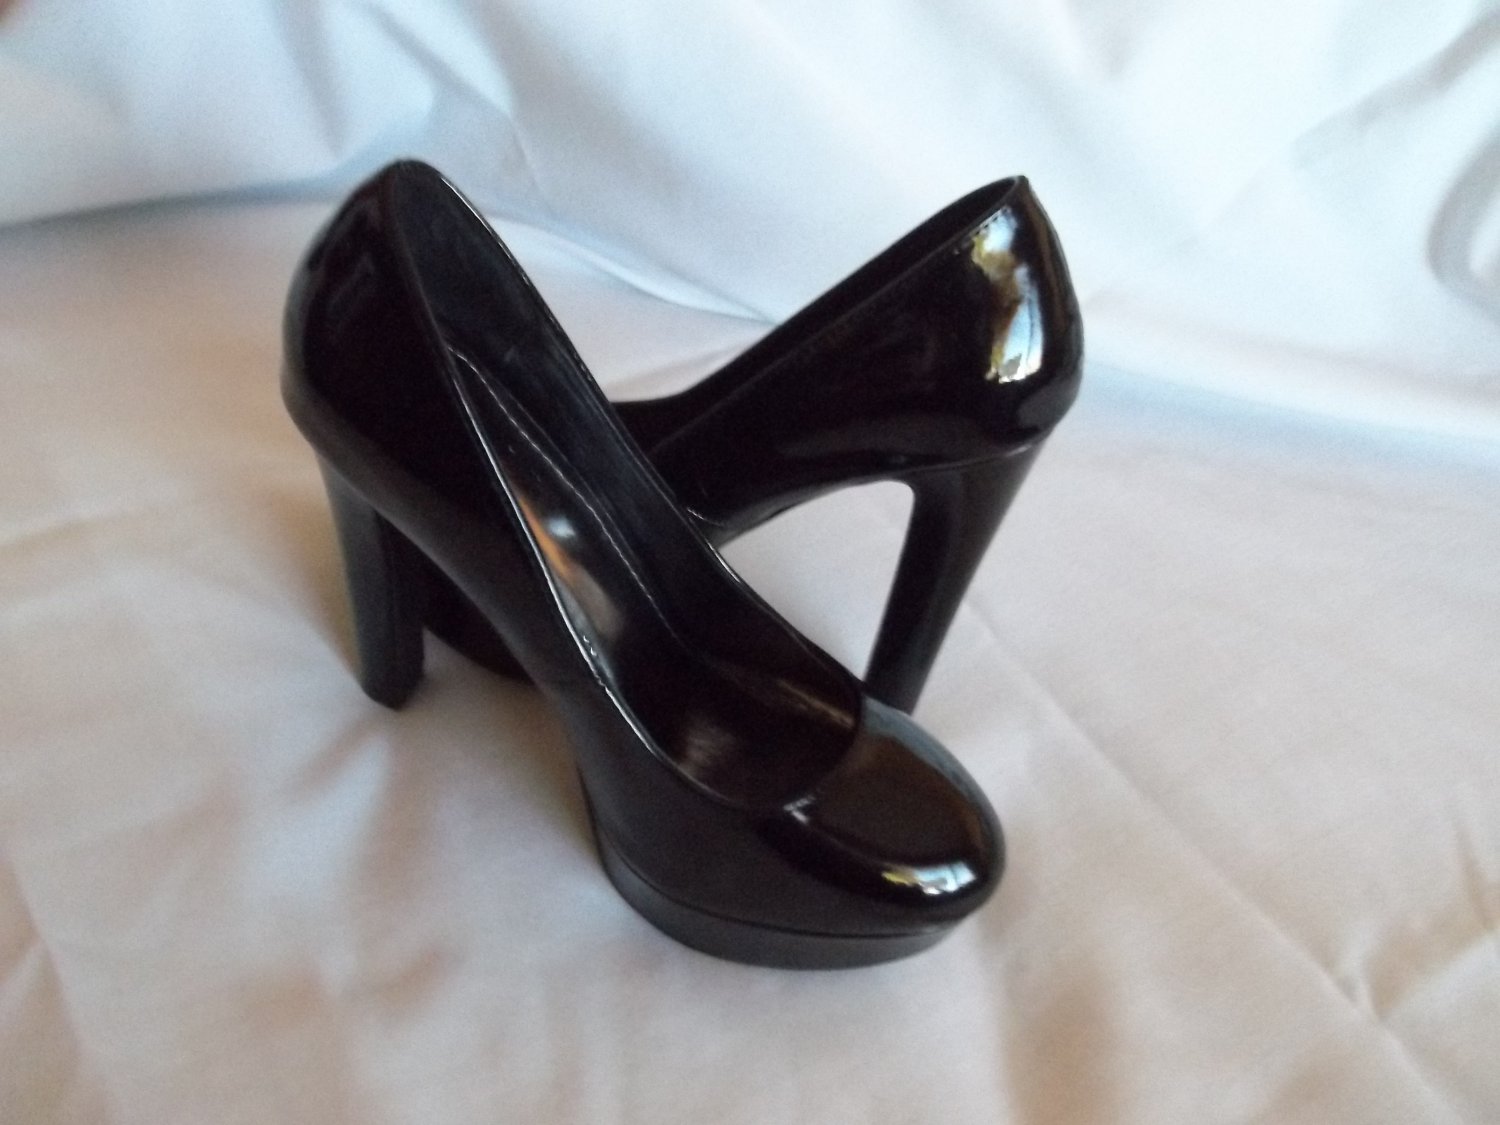 Round Toe Patent Leather Stiletto Platform Heels Size 7.5